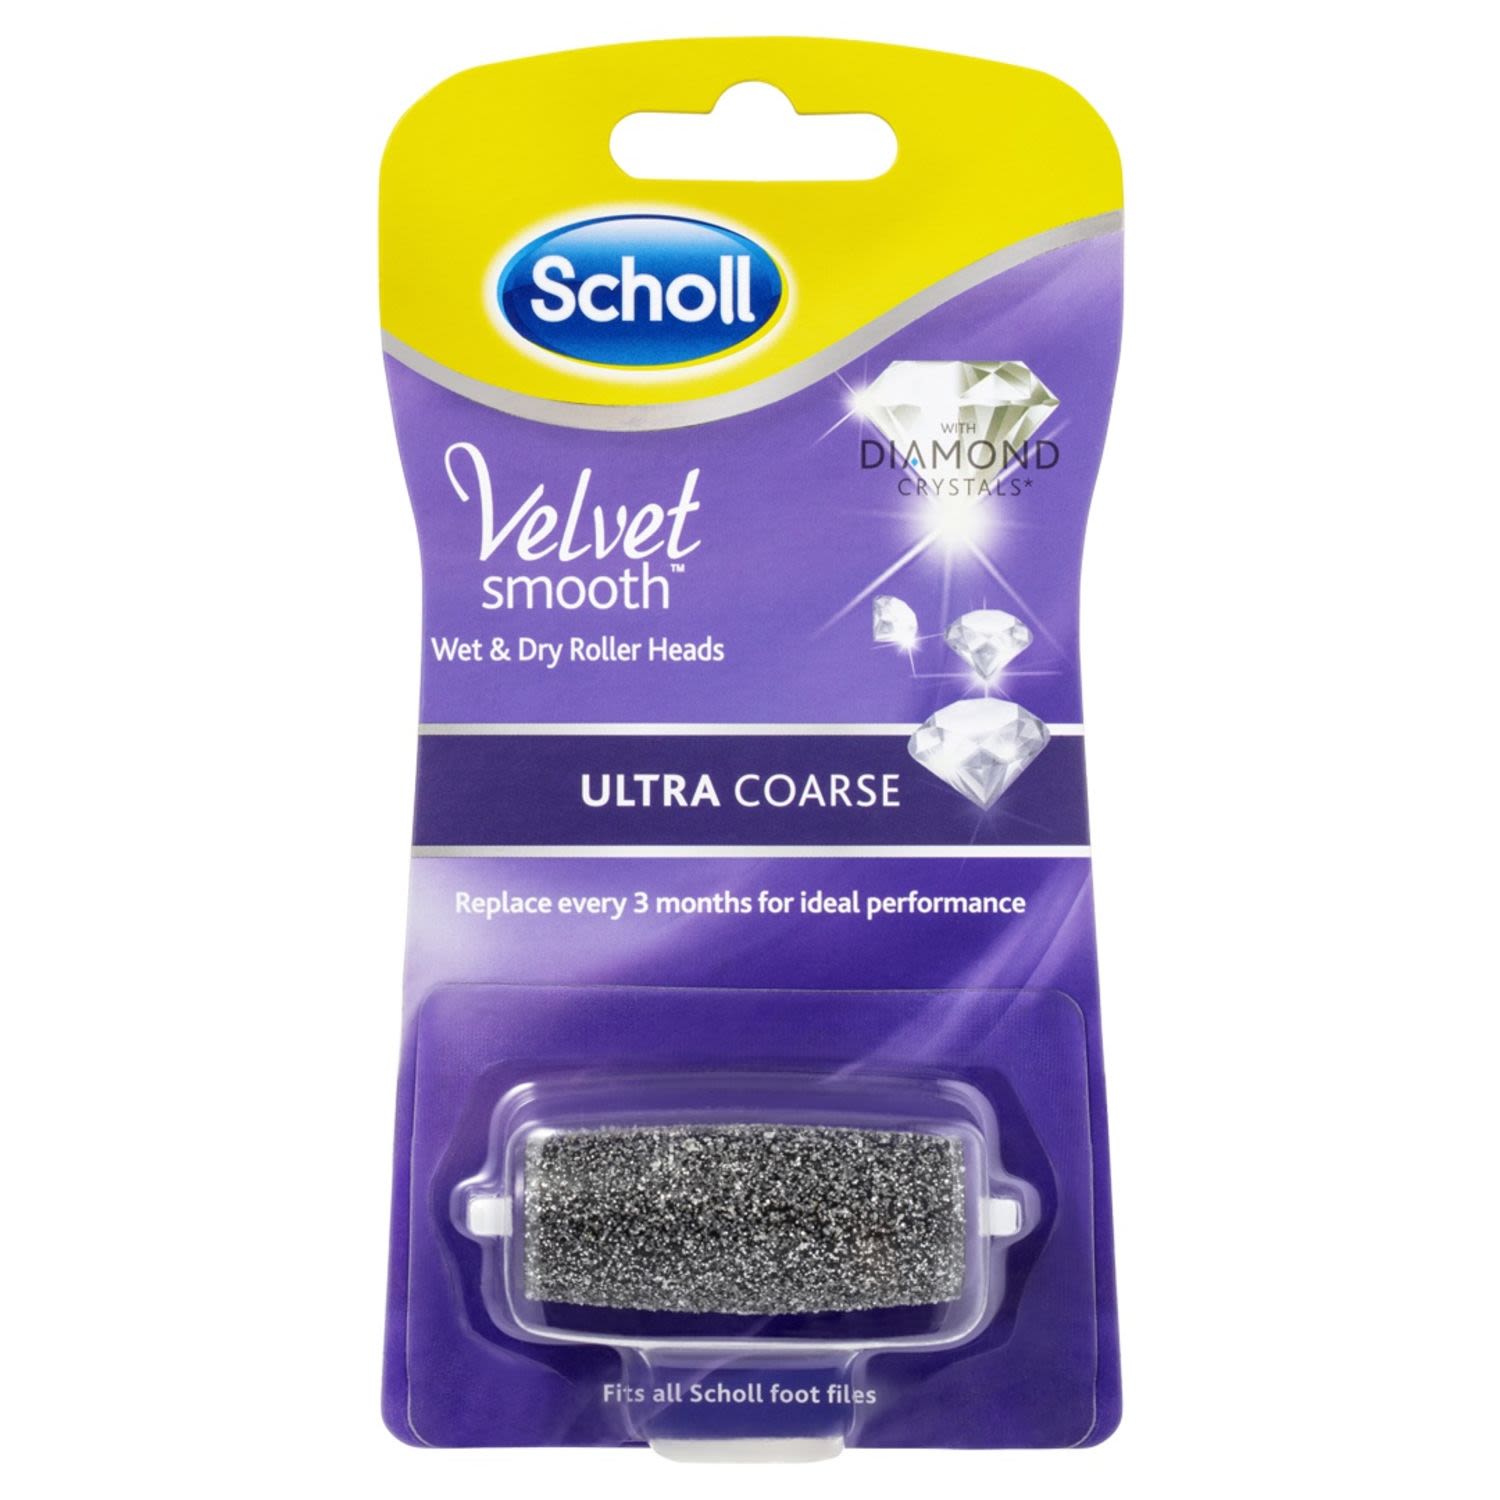 Scholl Velvet Smooth Wet & Dry Roller Heads Ultra Coarse, 1 Each